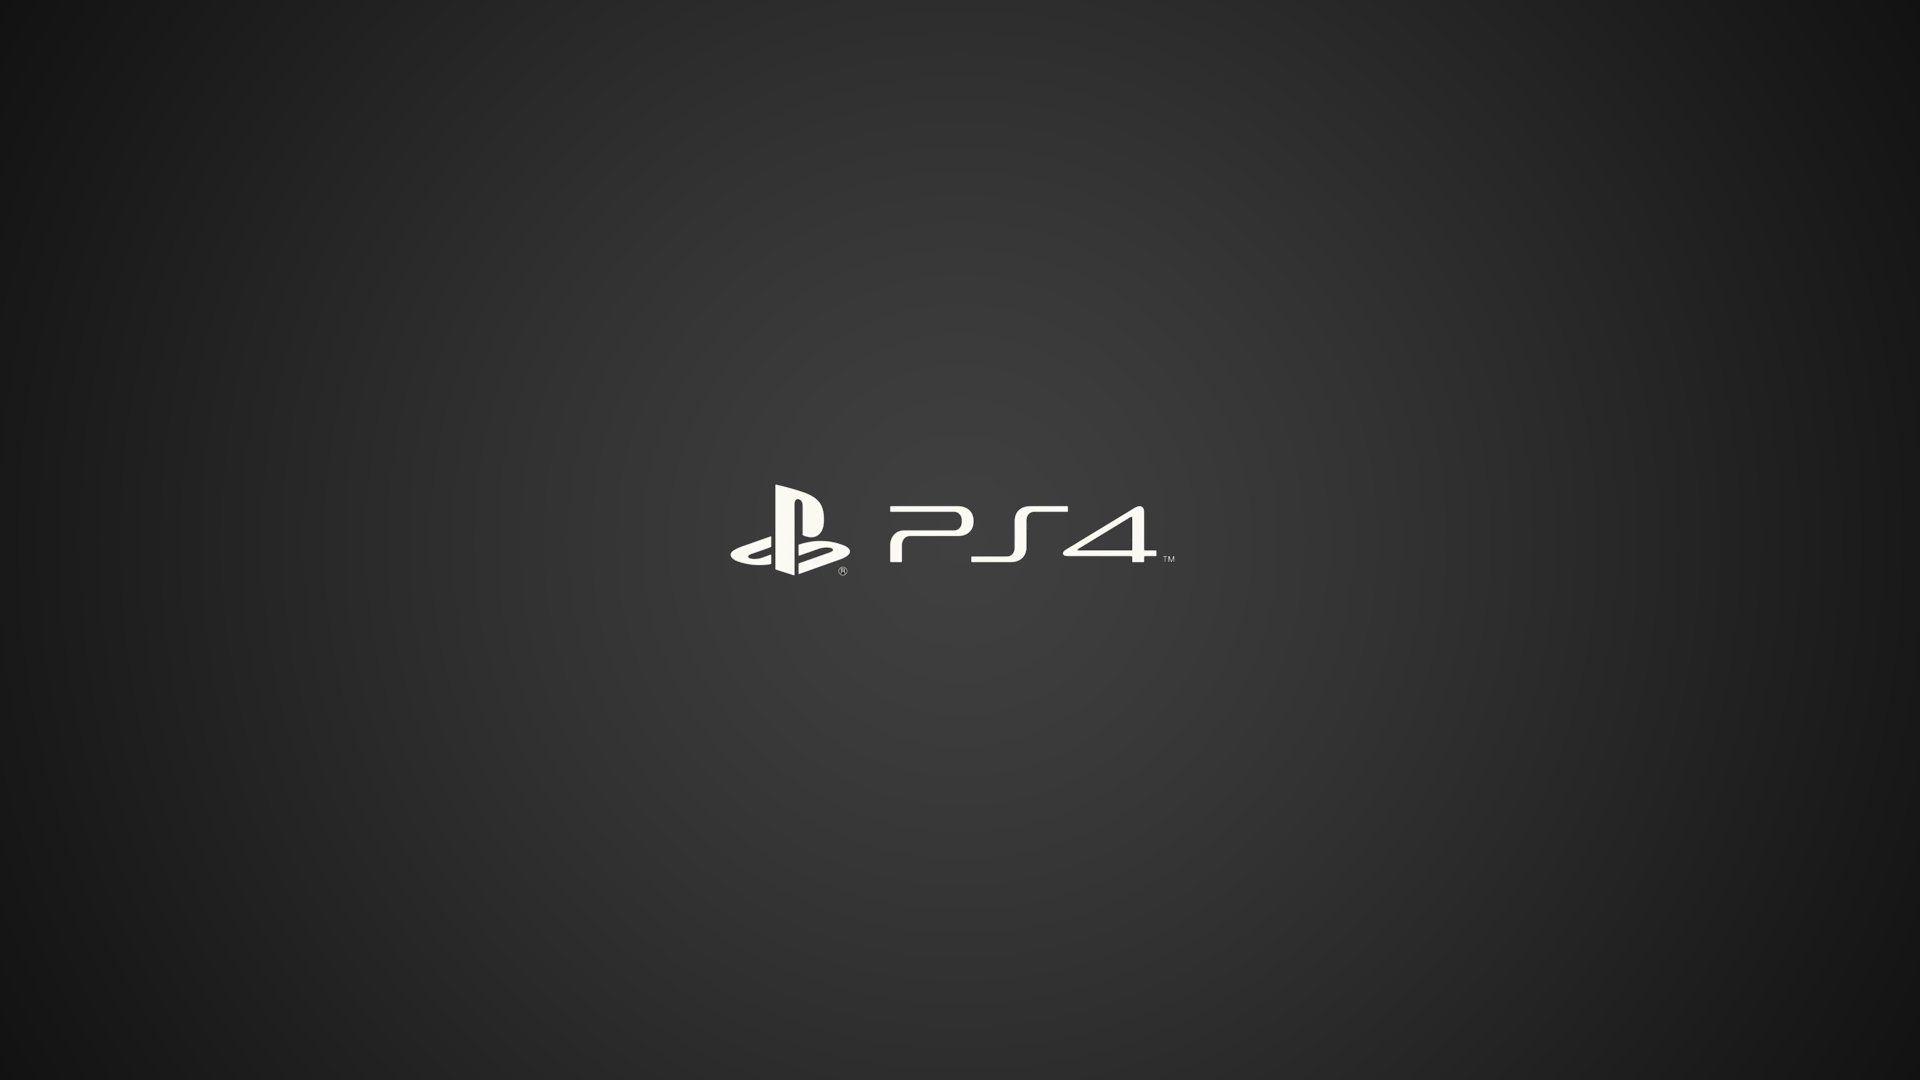 PS4 Logo #Wallpaper